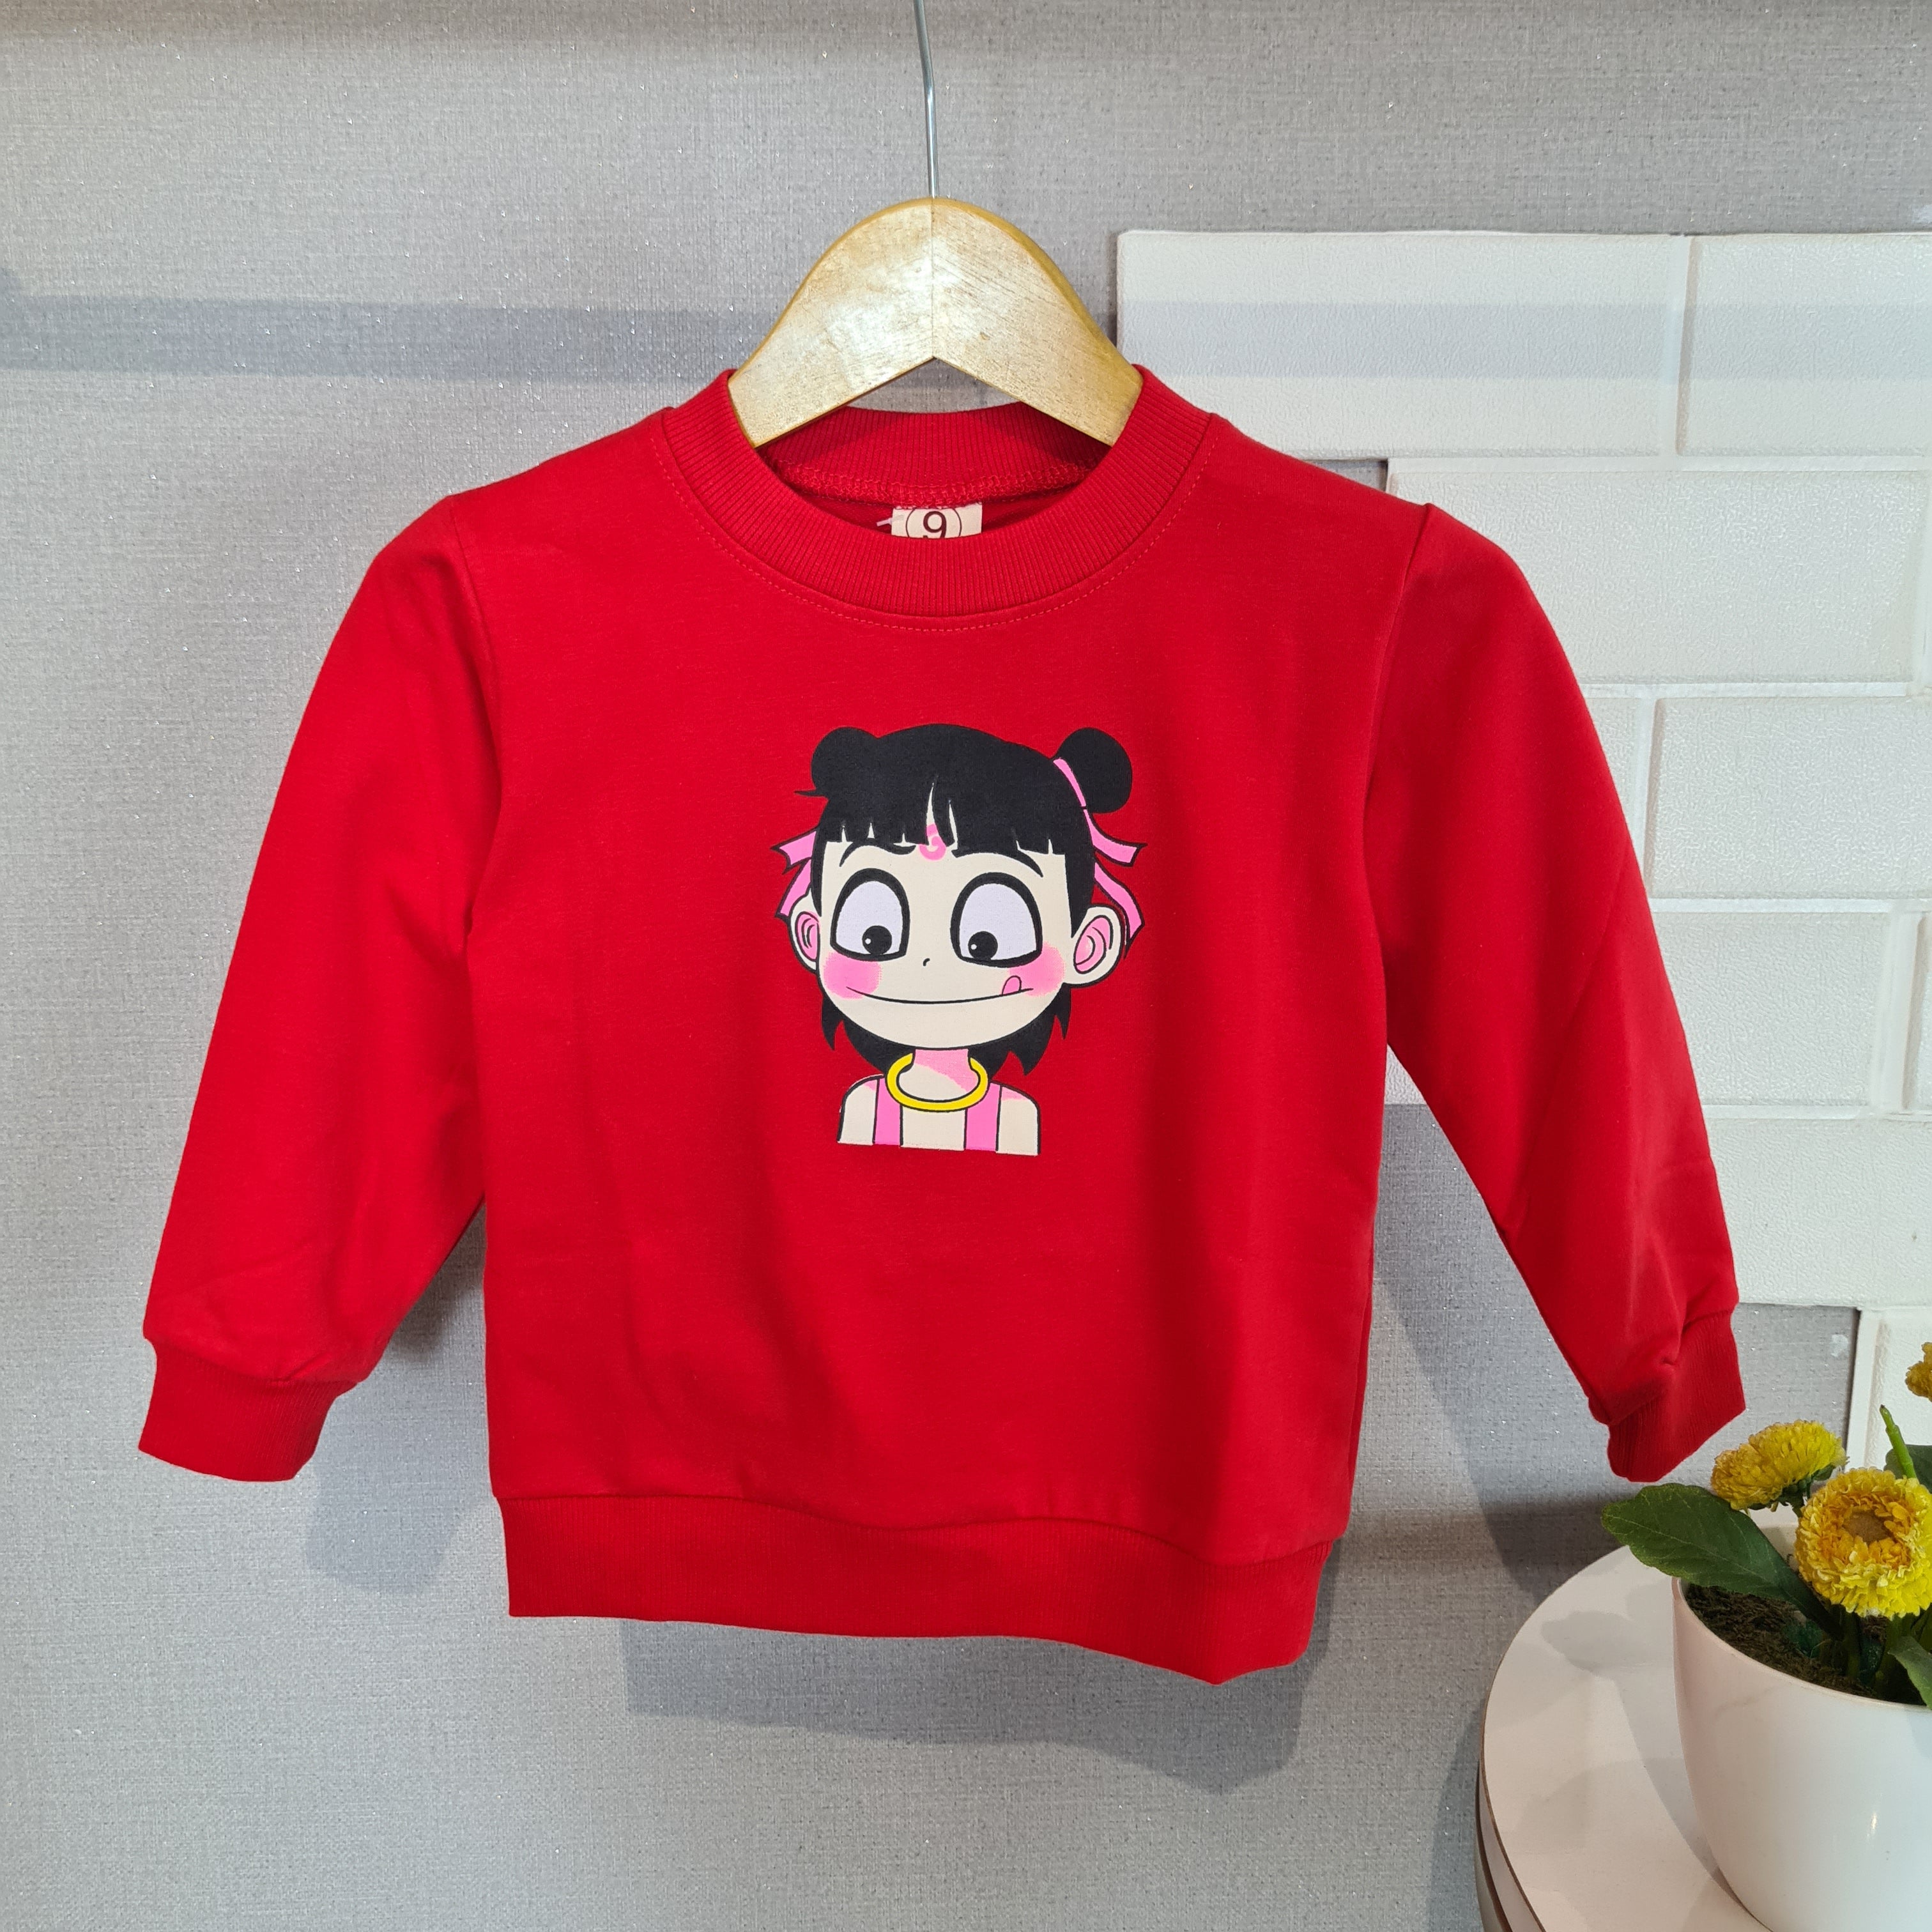 [102408] - Baju Atasan Sweater Fashion Import Anak Perempuan - Motif Cute Girl